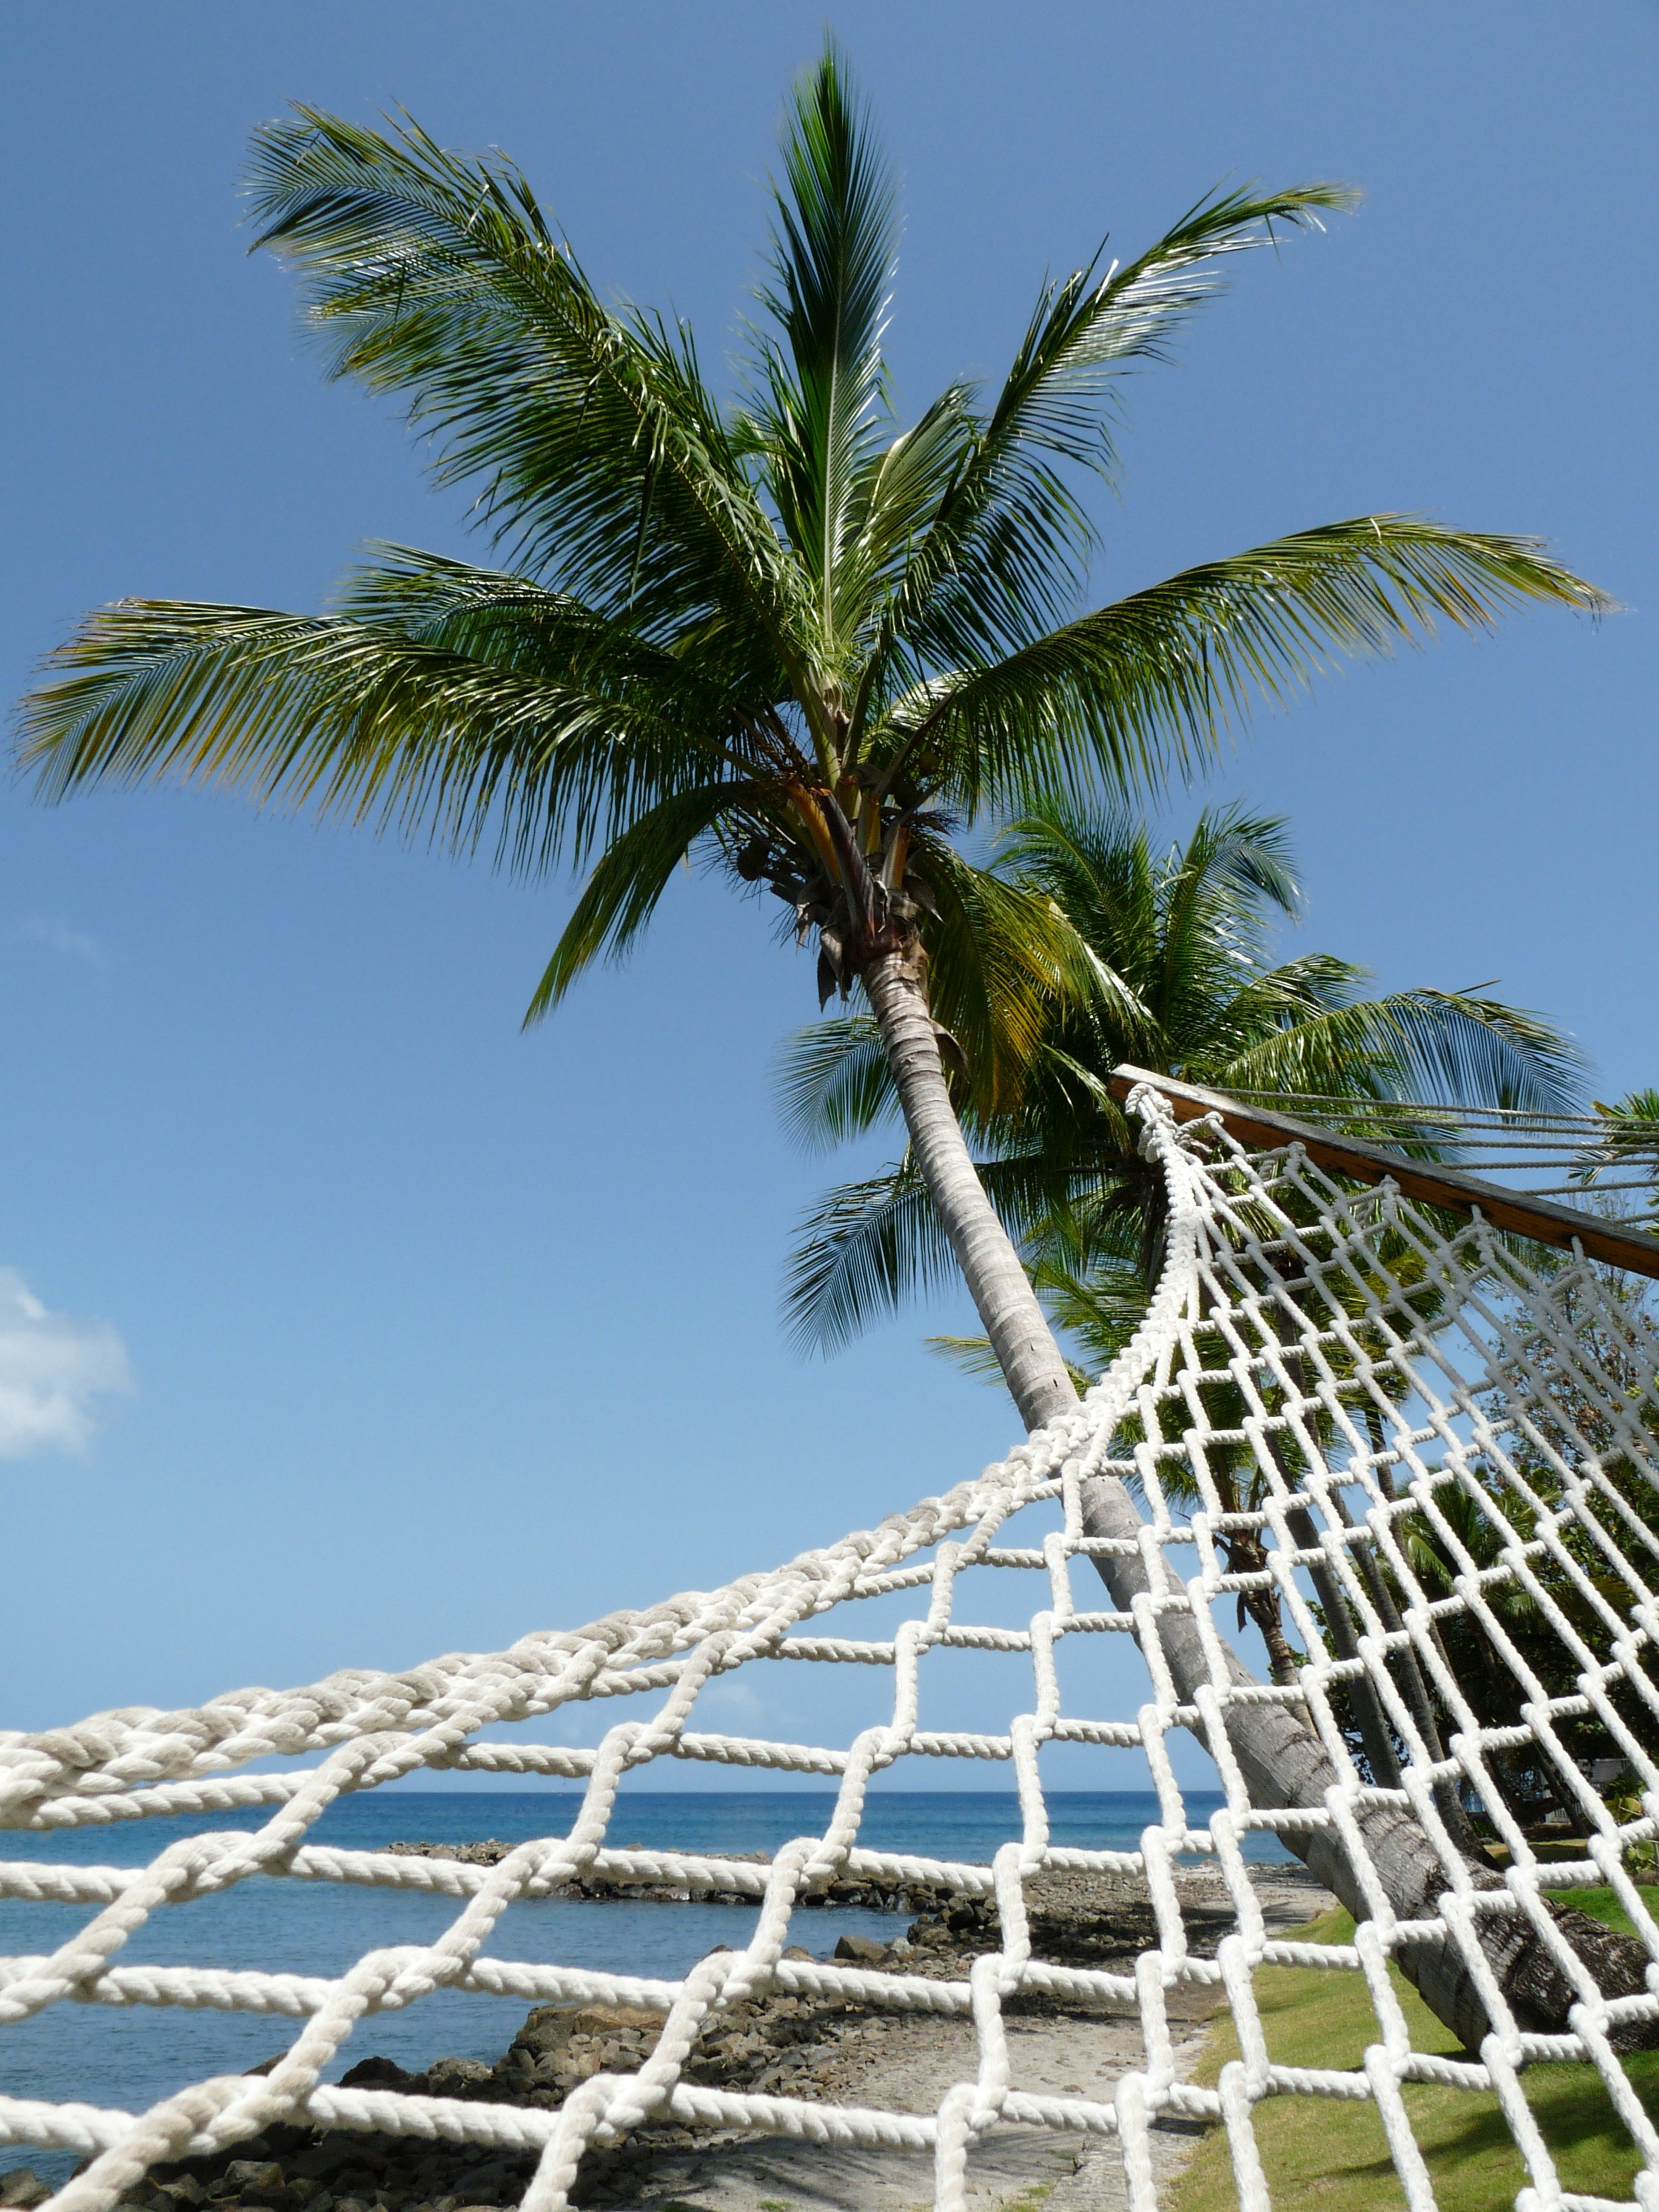 scenery of a hammock on a green palm tree